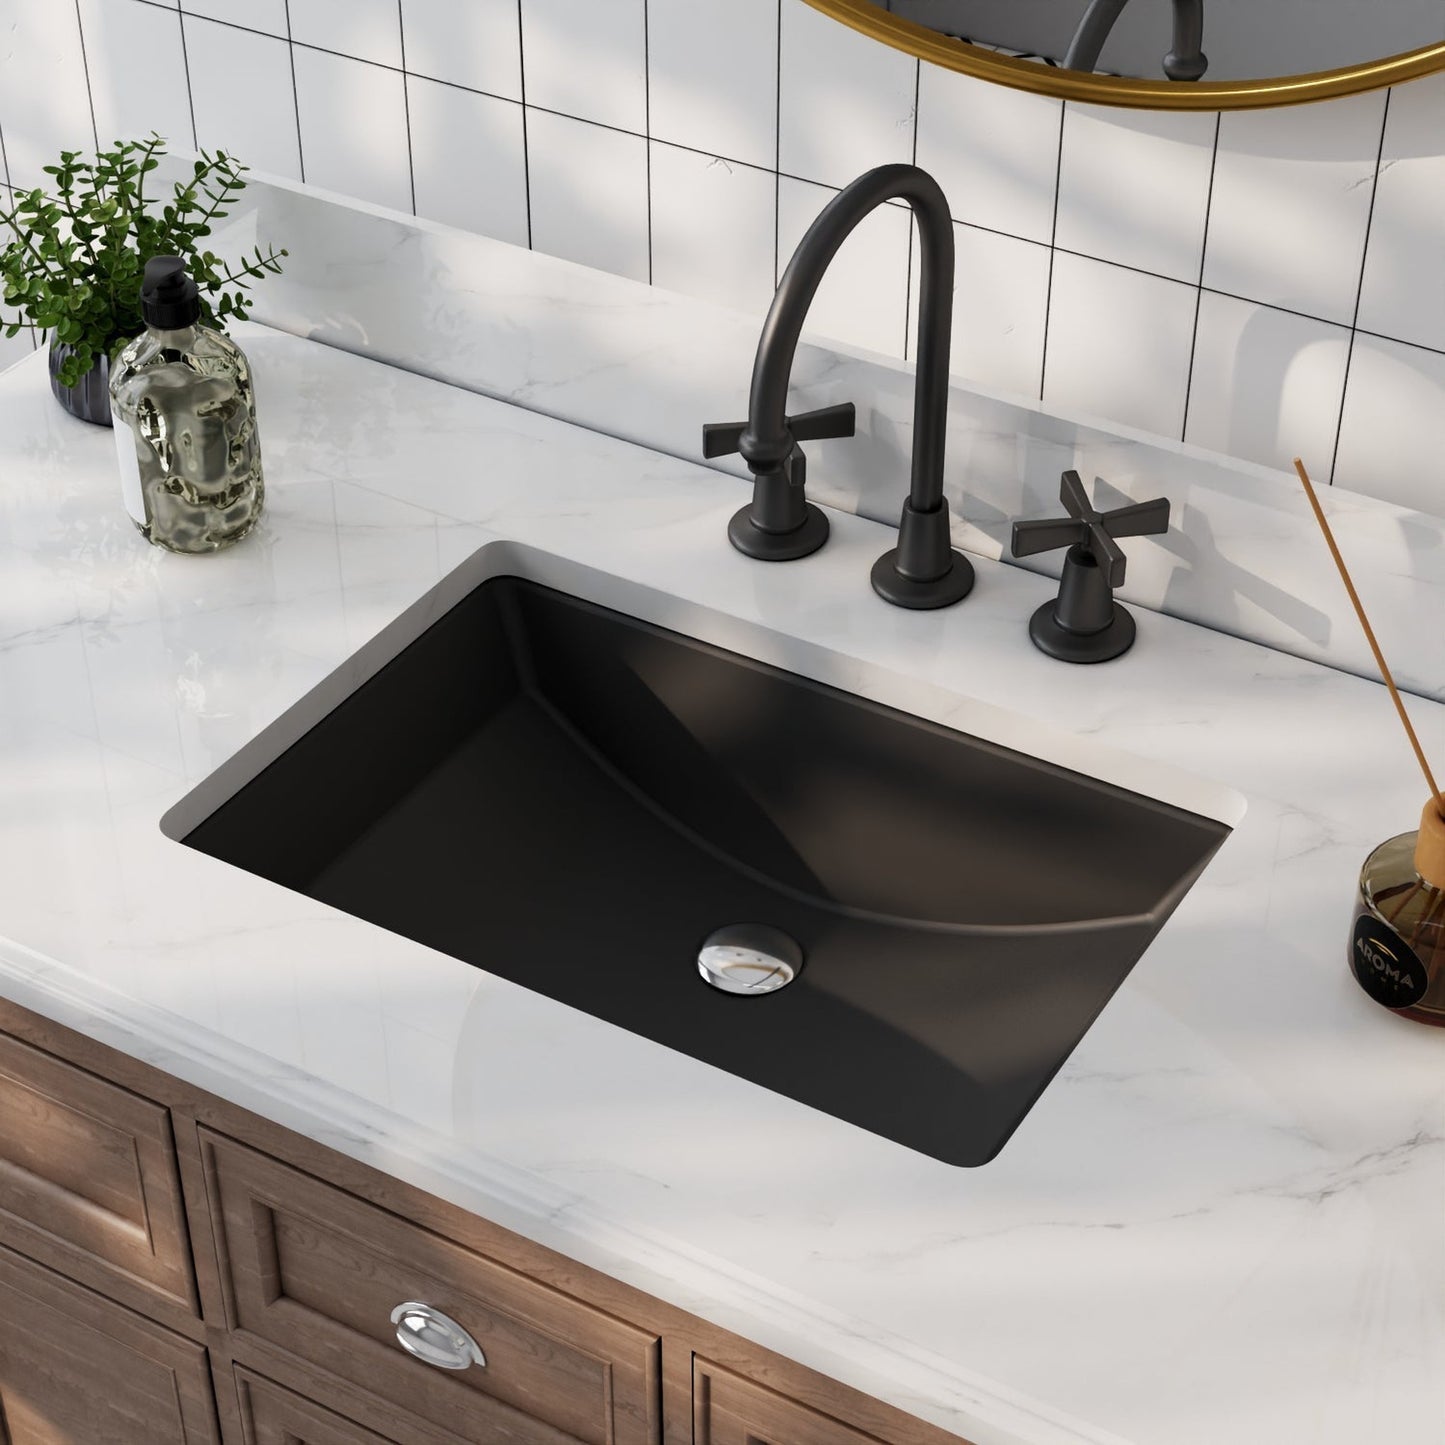 DeerValley Ally 21" x 15" Rectangular Black Undermount Bathroom Sink With Overflow Hole